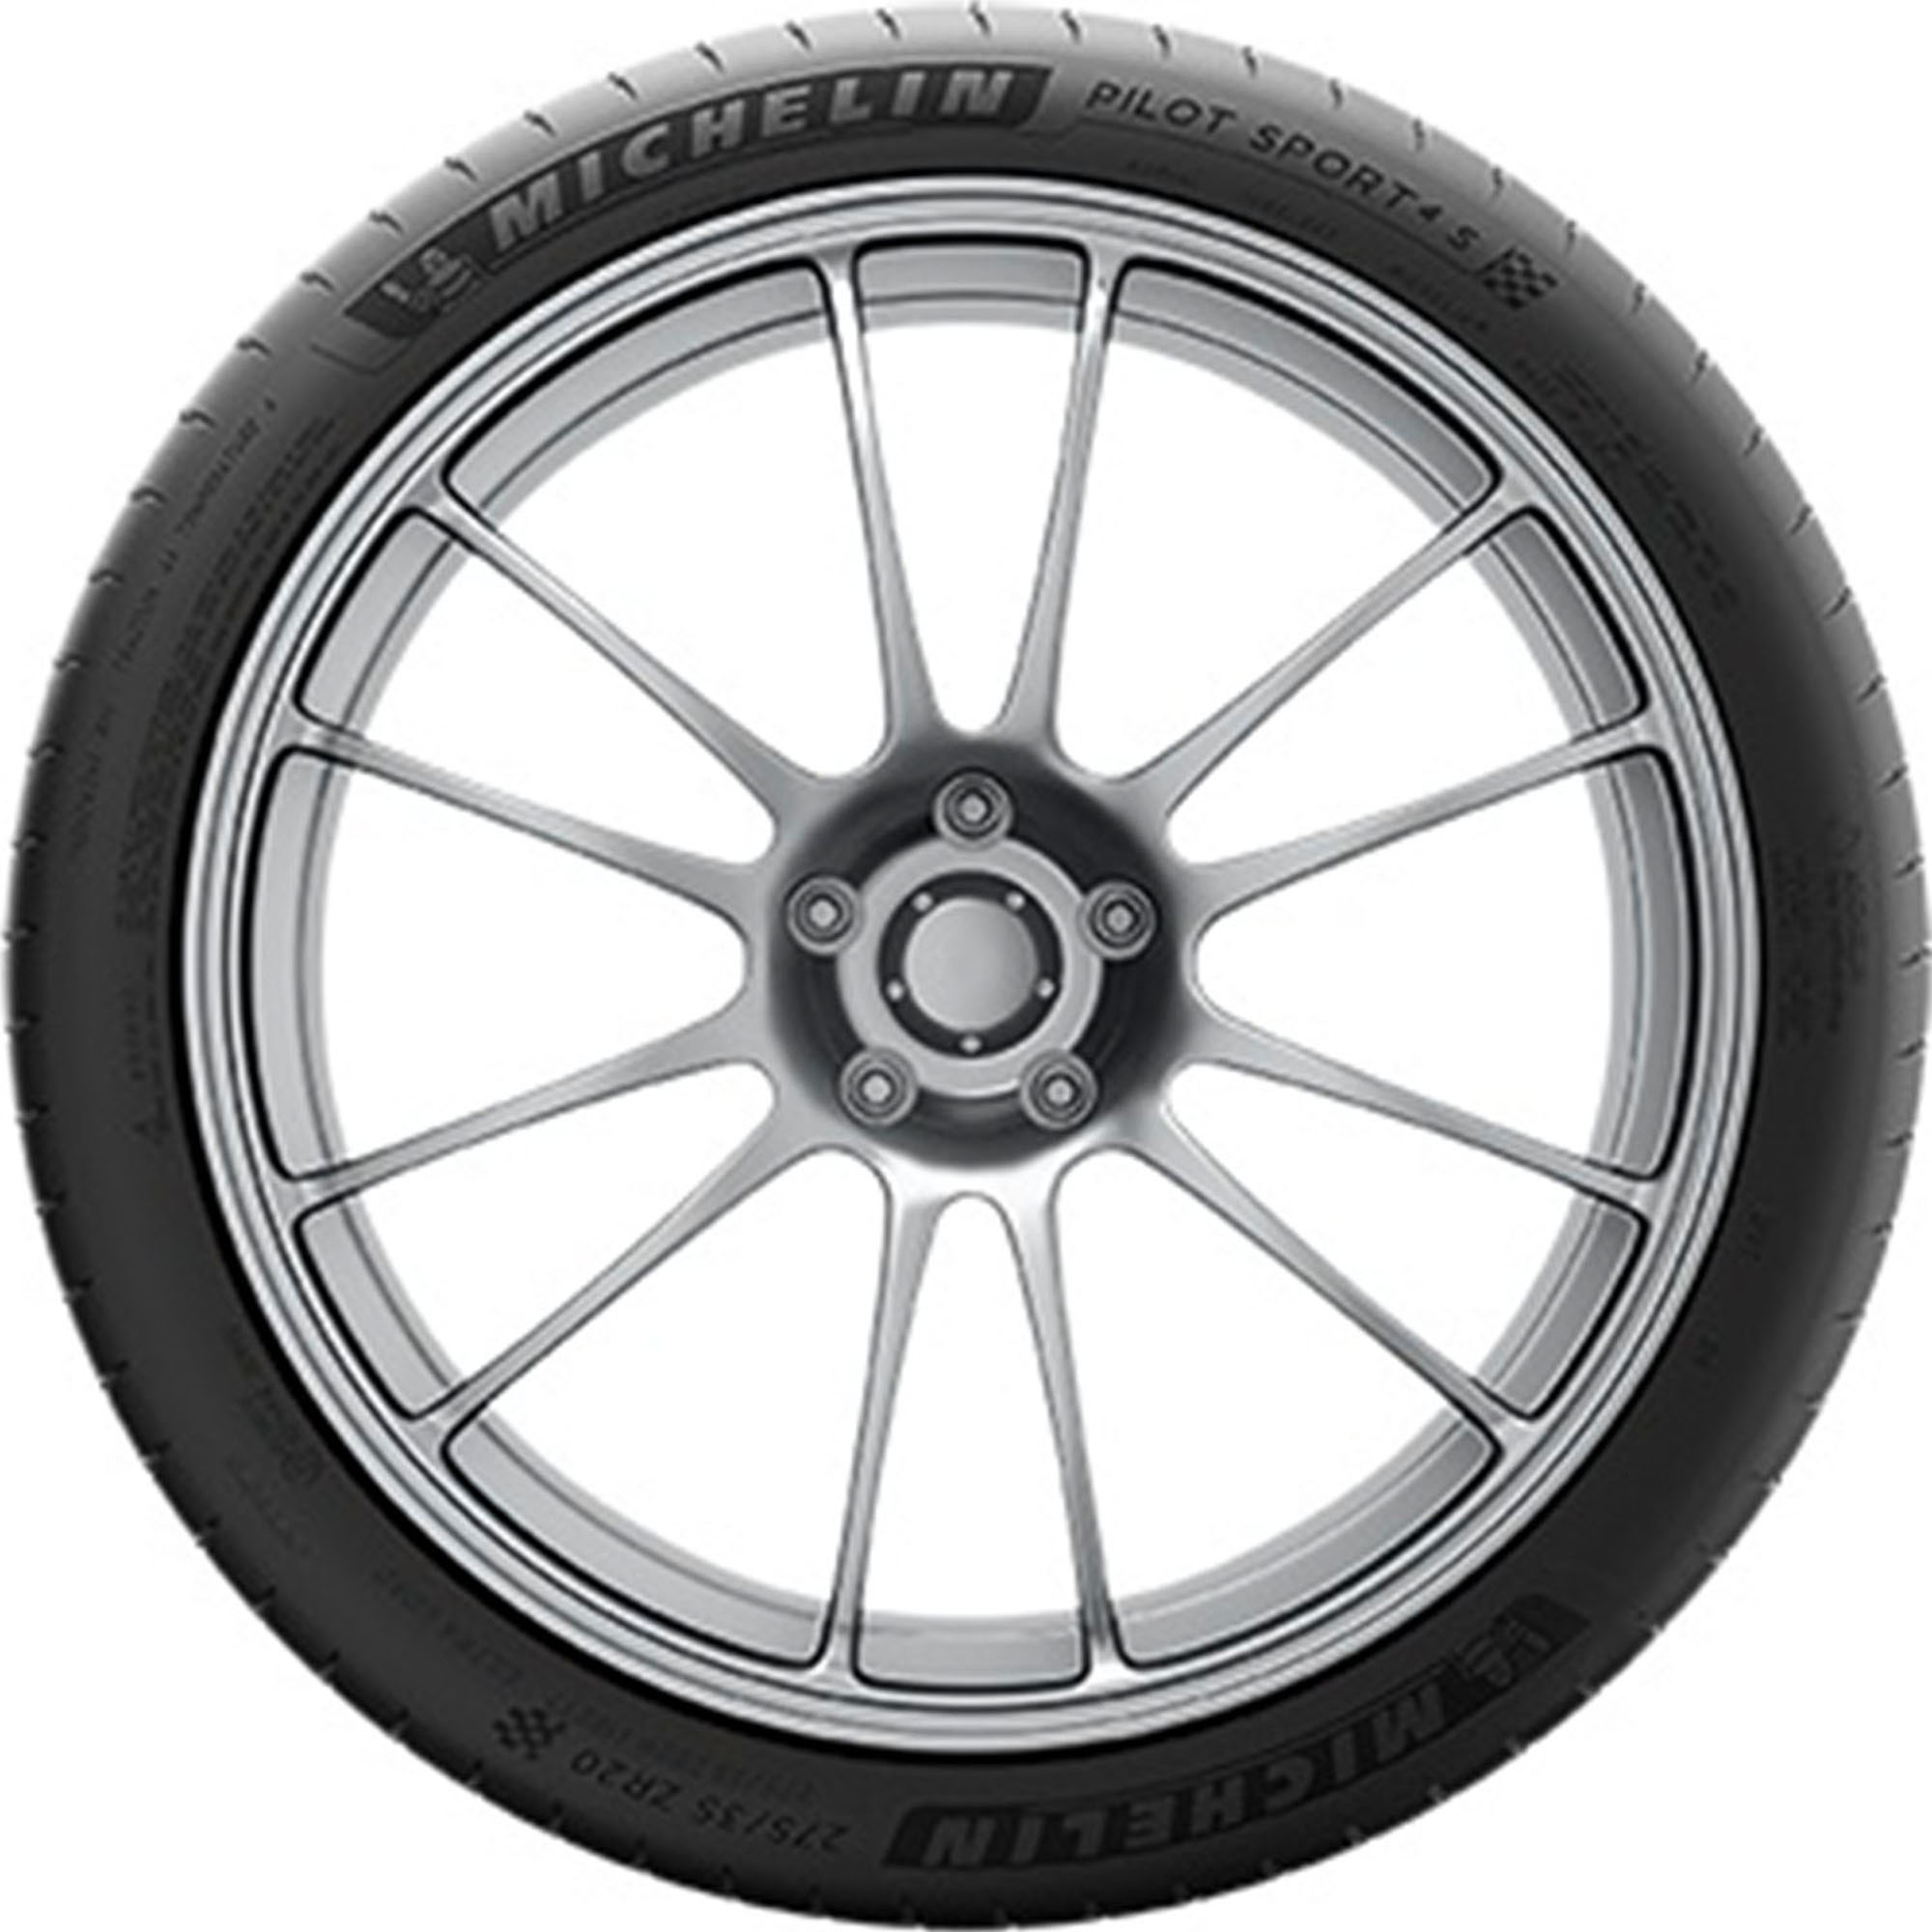 Michelin Pilot Sport 4S Performance 265/35ZR18 (97Y) XL Passenger Tire - image 2 of 4